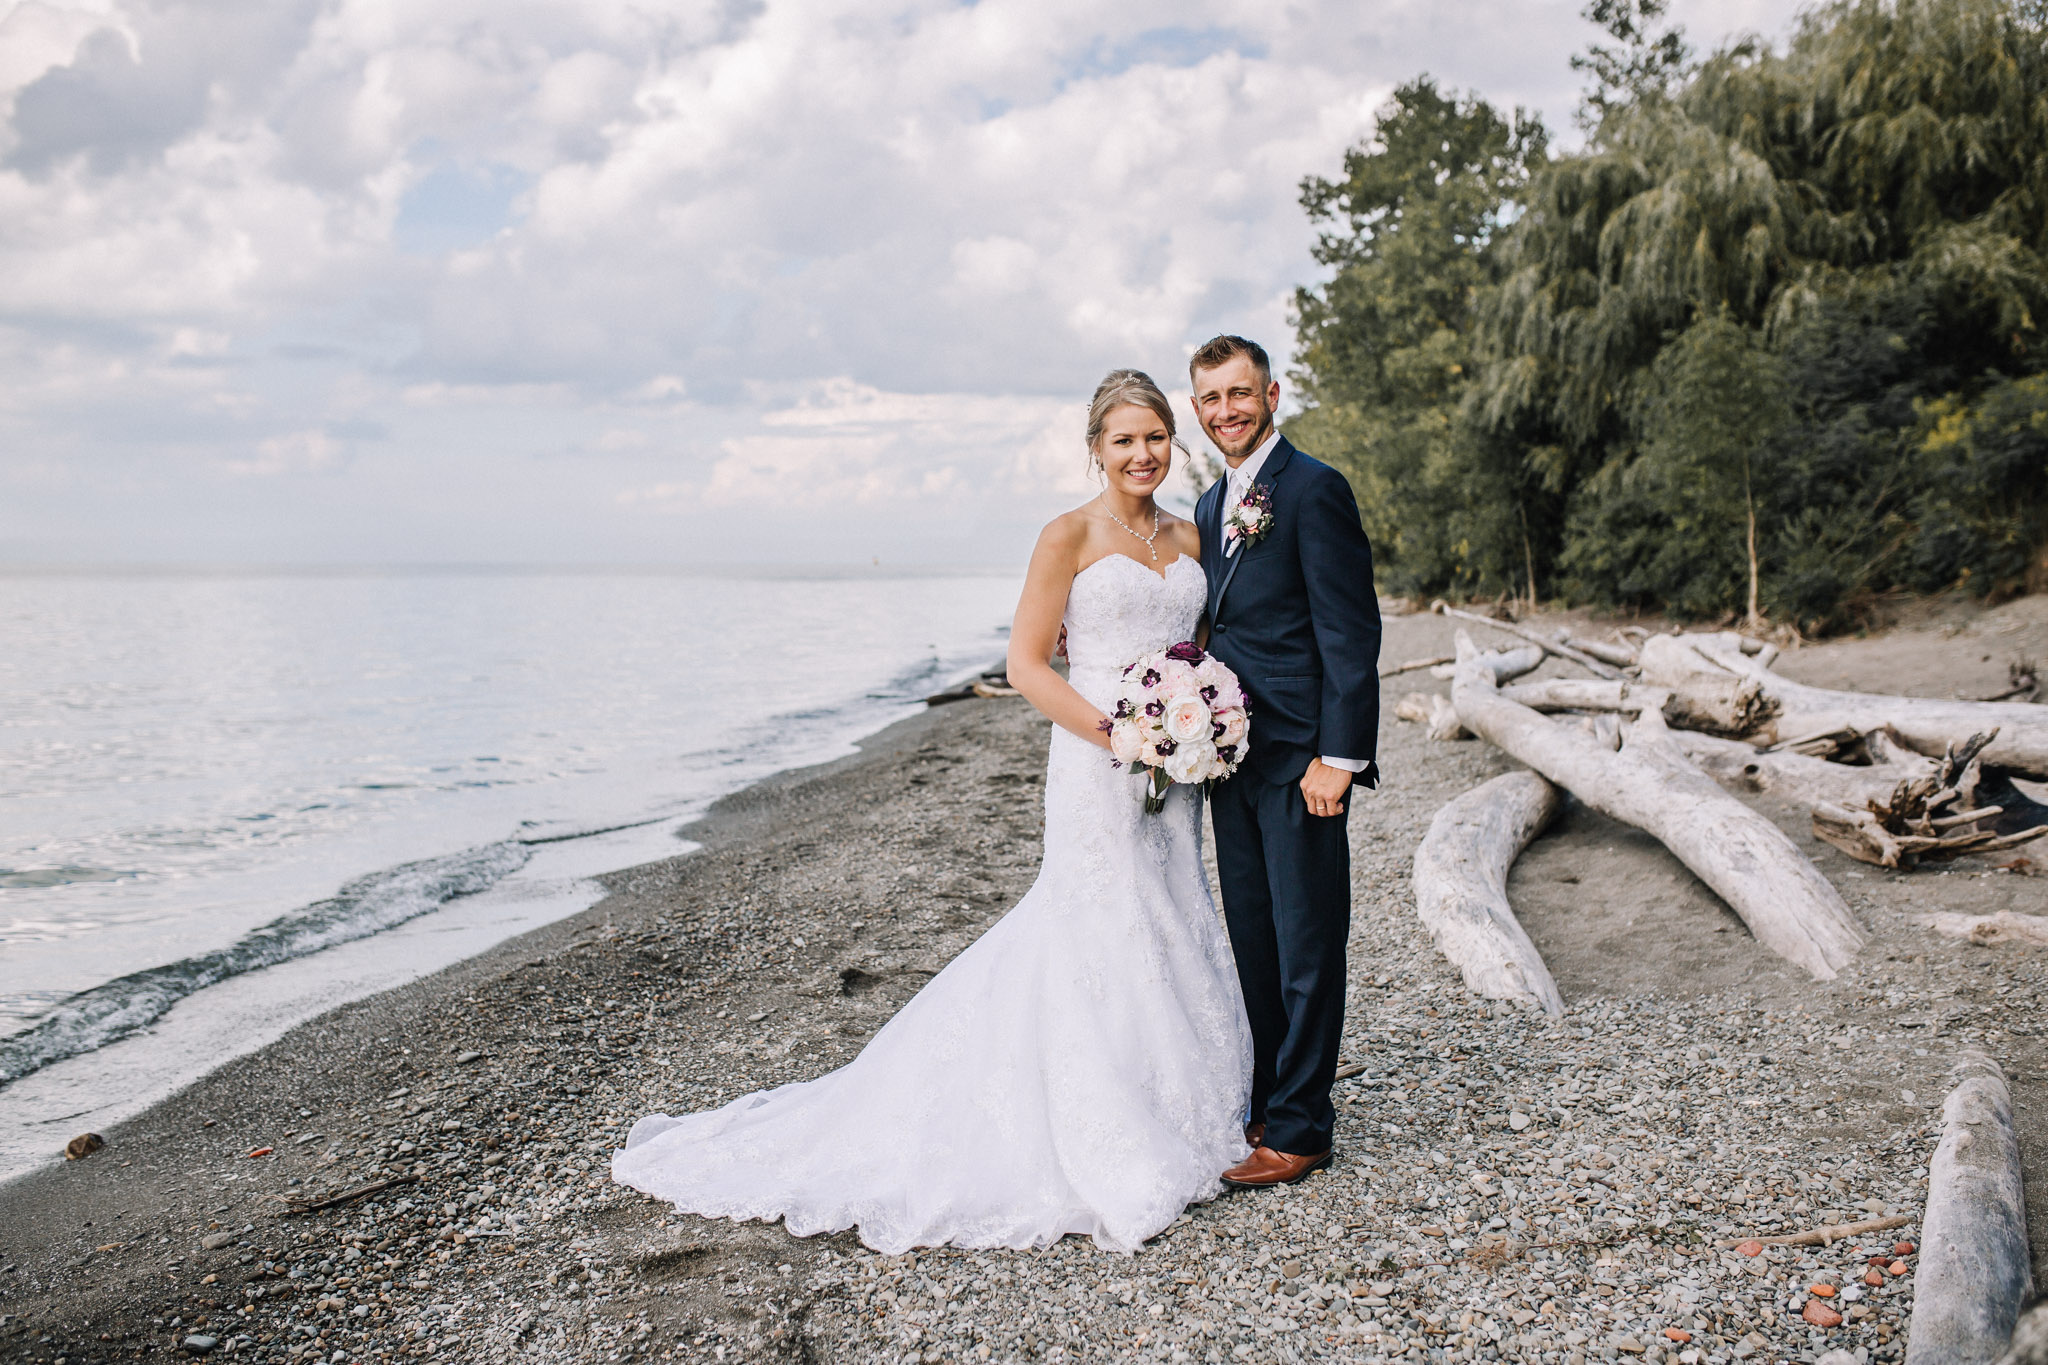 Mr. & Mrs. Kempinski - Lake Erie Bluffs - Northeast Ohio Wedding Photographer